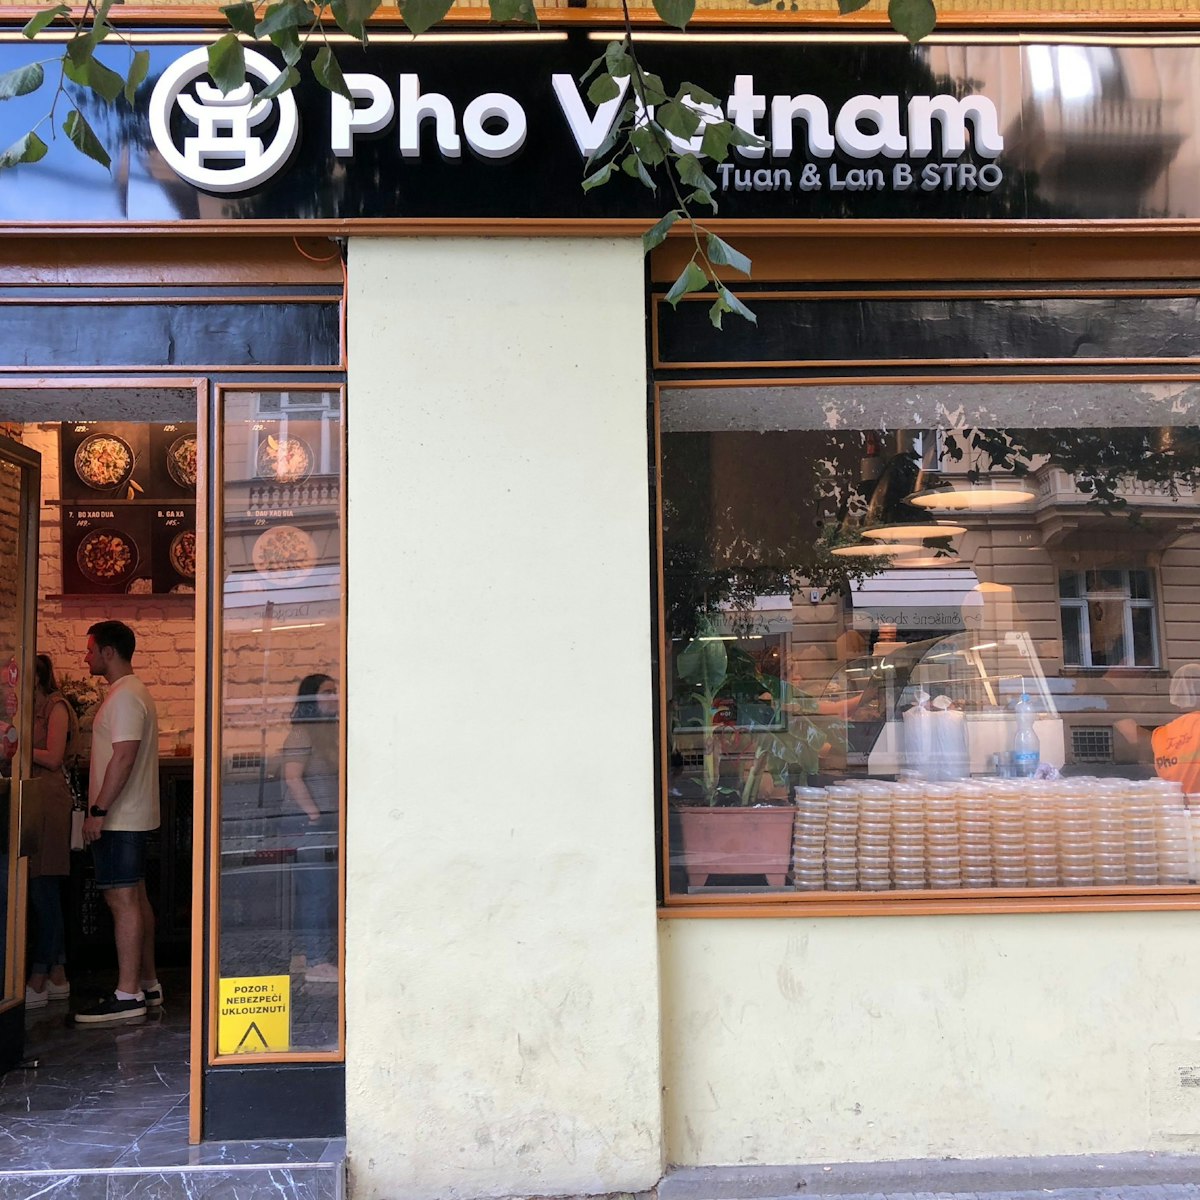 Pho Vietnam Tuan & Luan exterior.